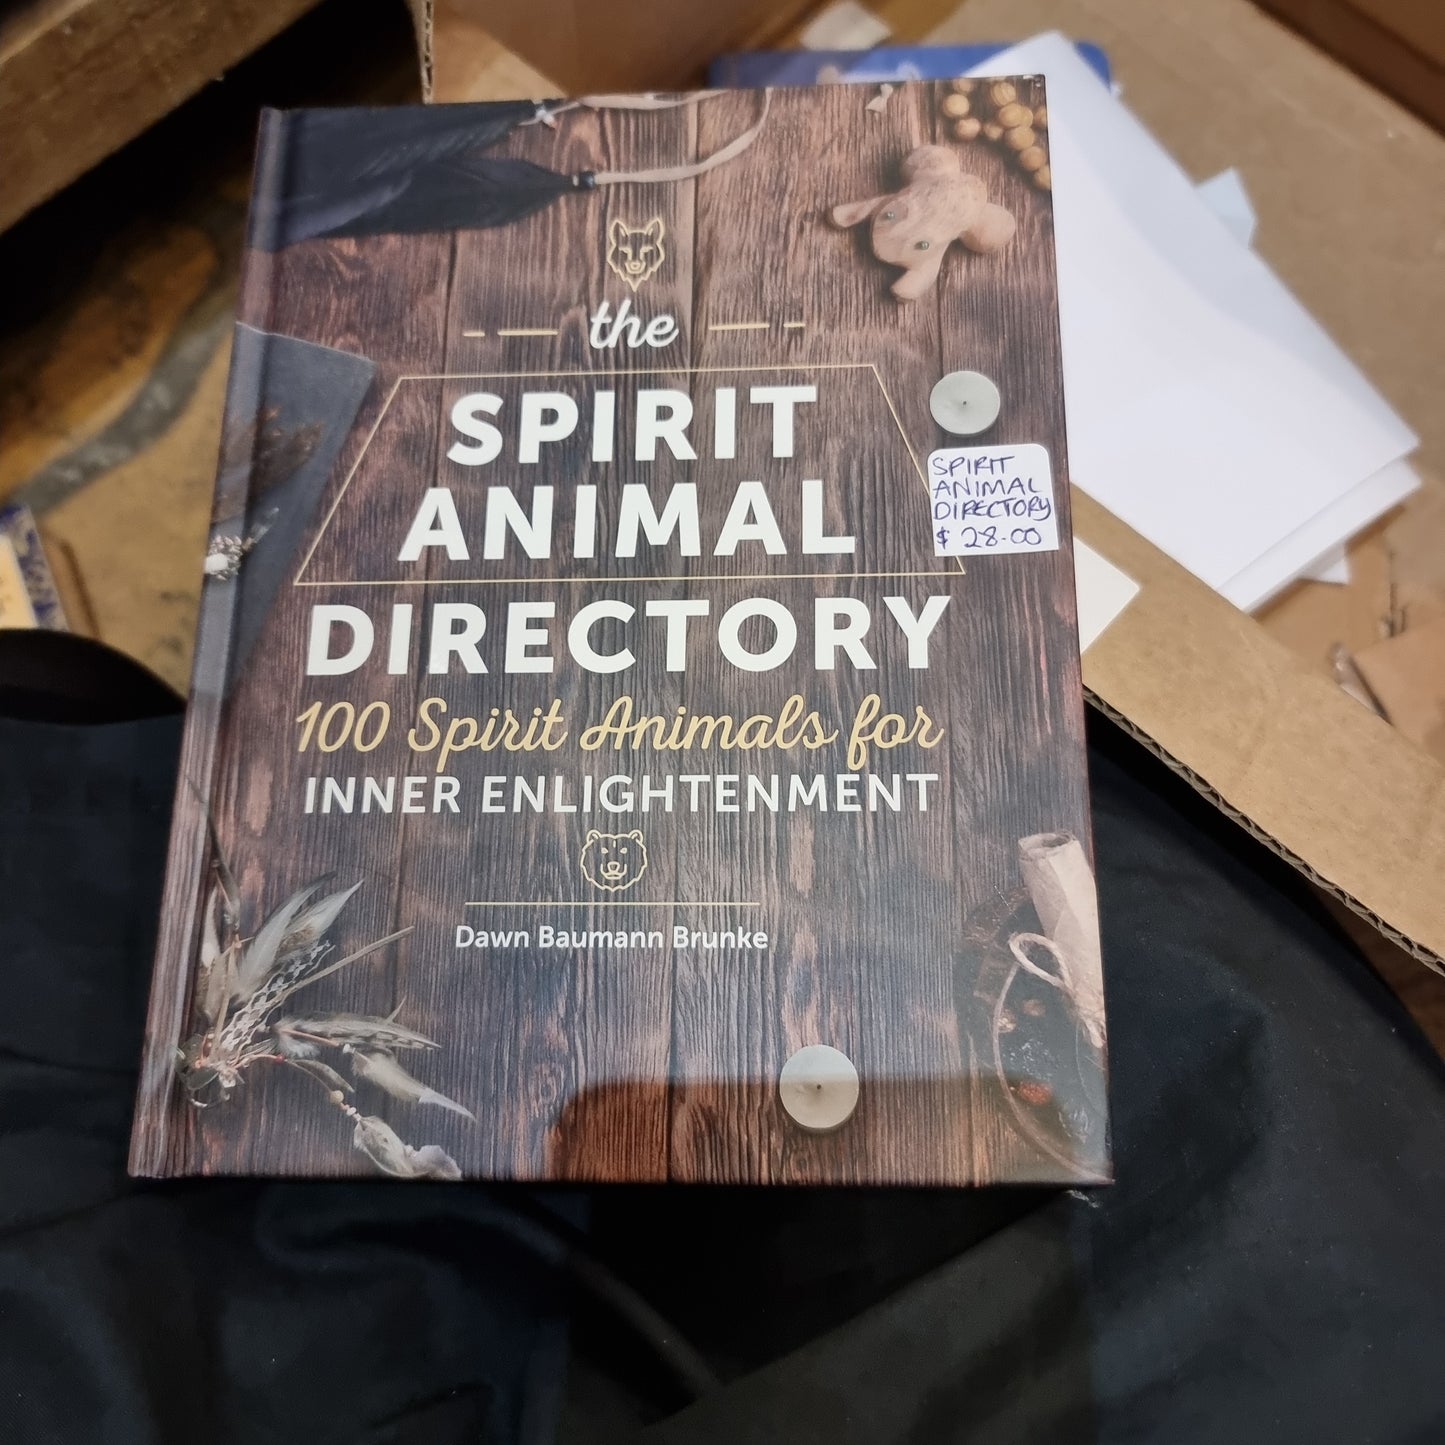 Spirit animal directory - Rivendell Shop